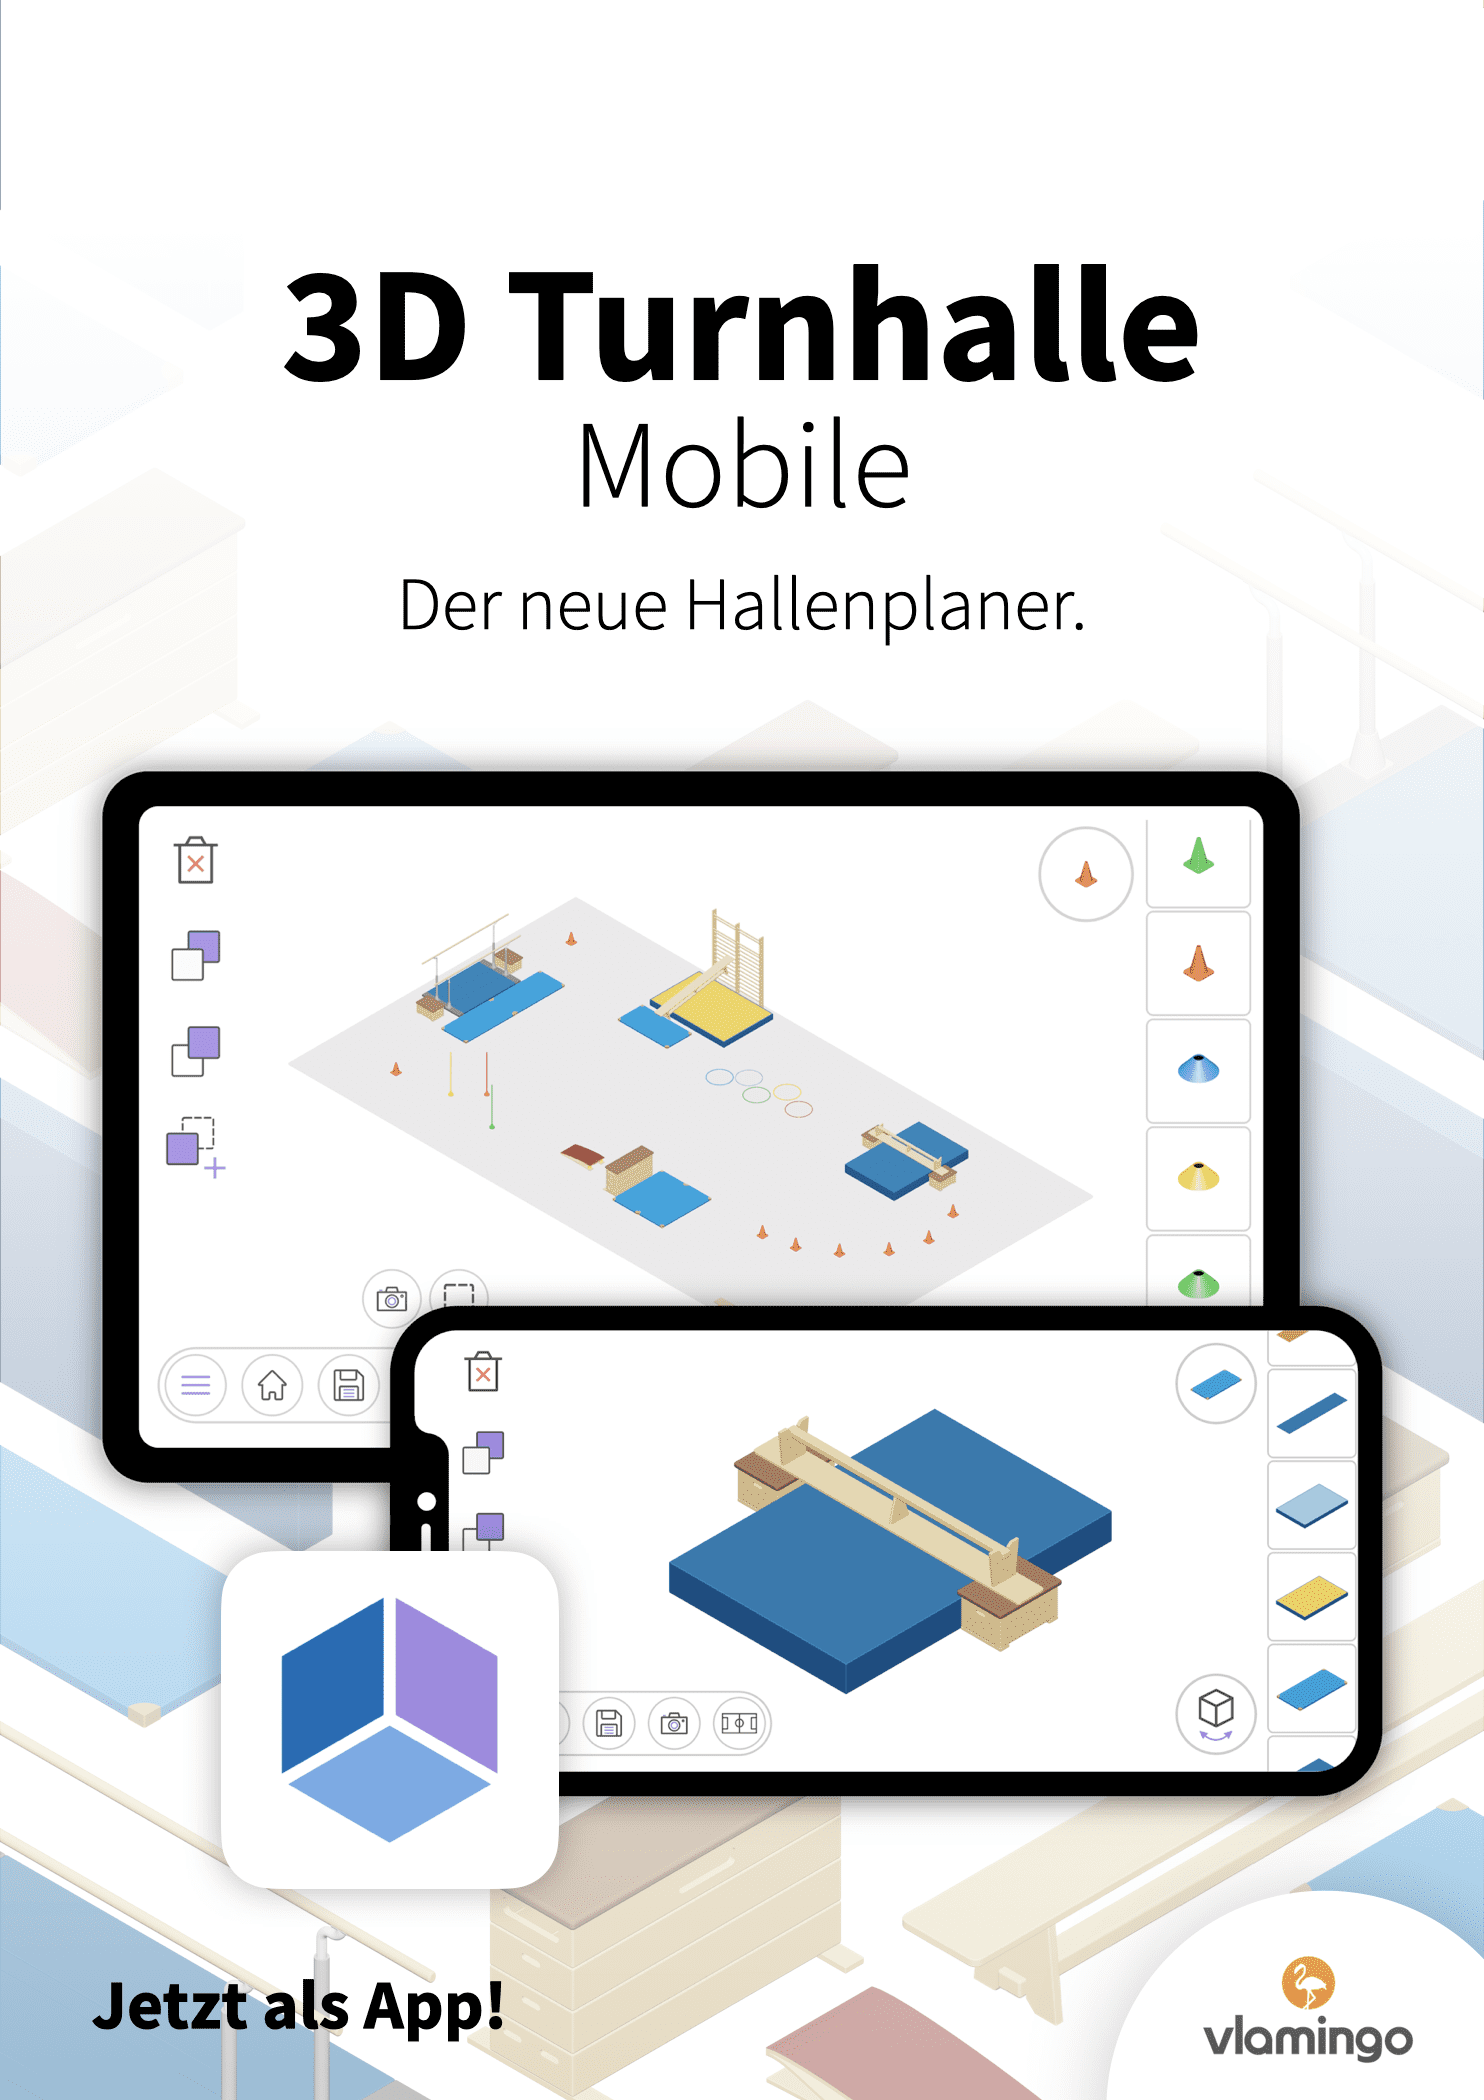 3D Turnhalle Mobile (Hallenplaner)